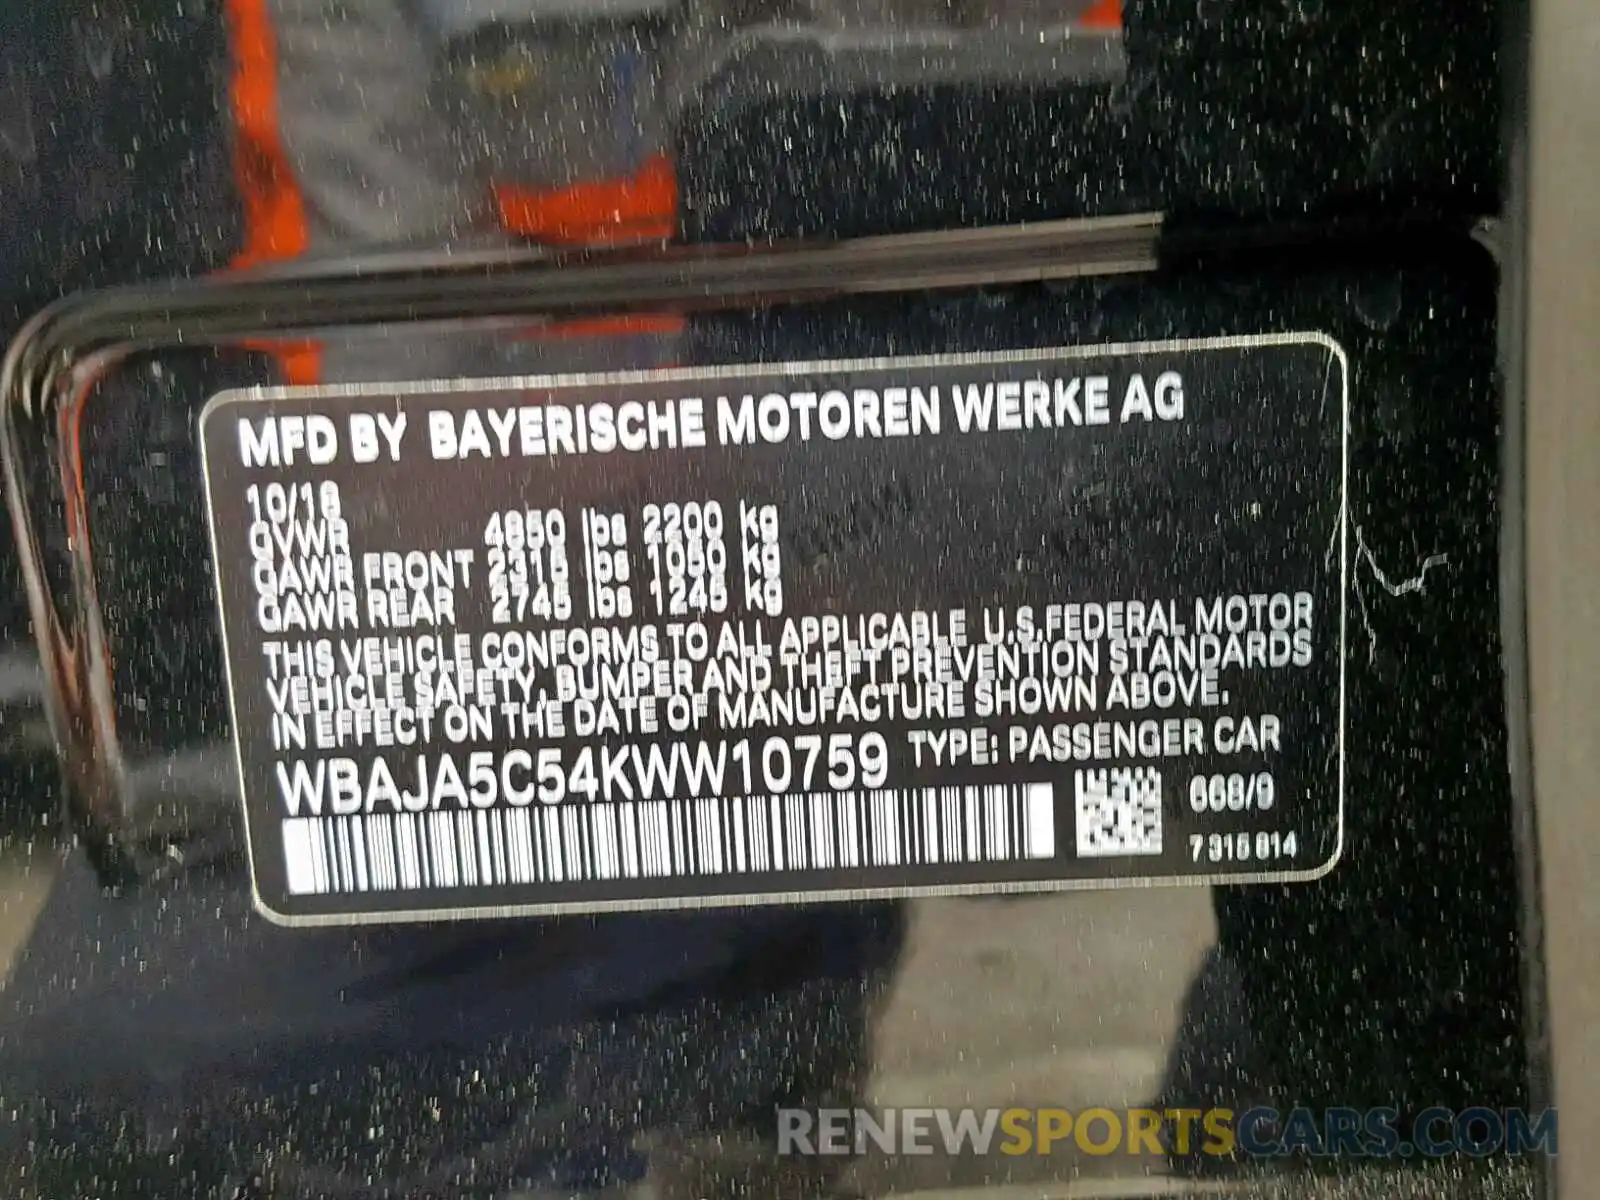 10 Photograph of a damaged car WBAJA5C54KWW10759 BMW 5 SERIES 2019